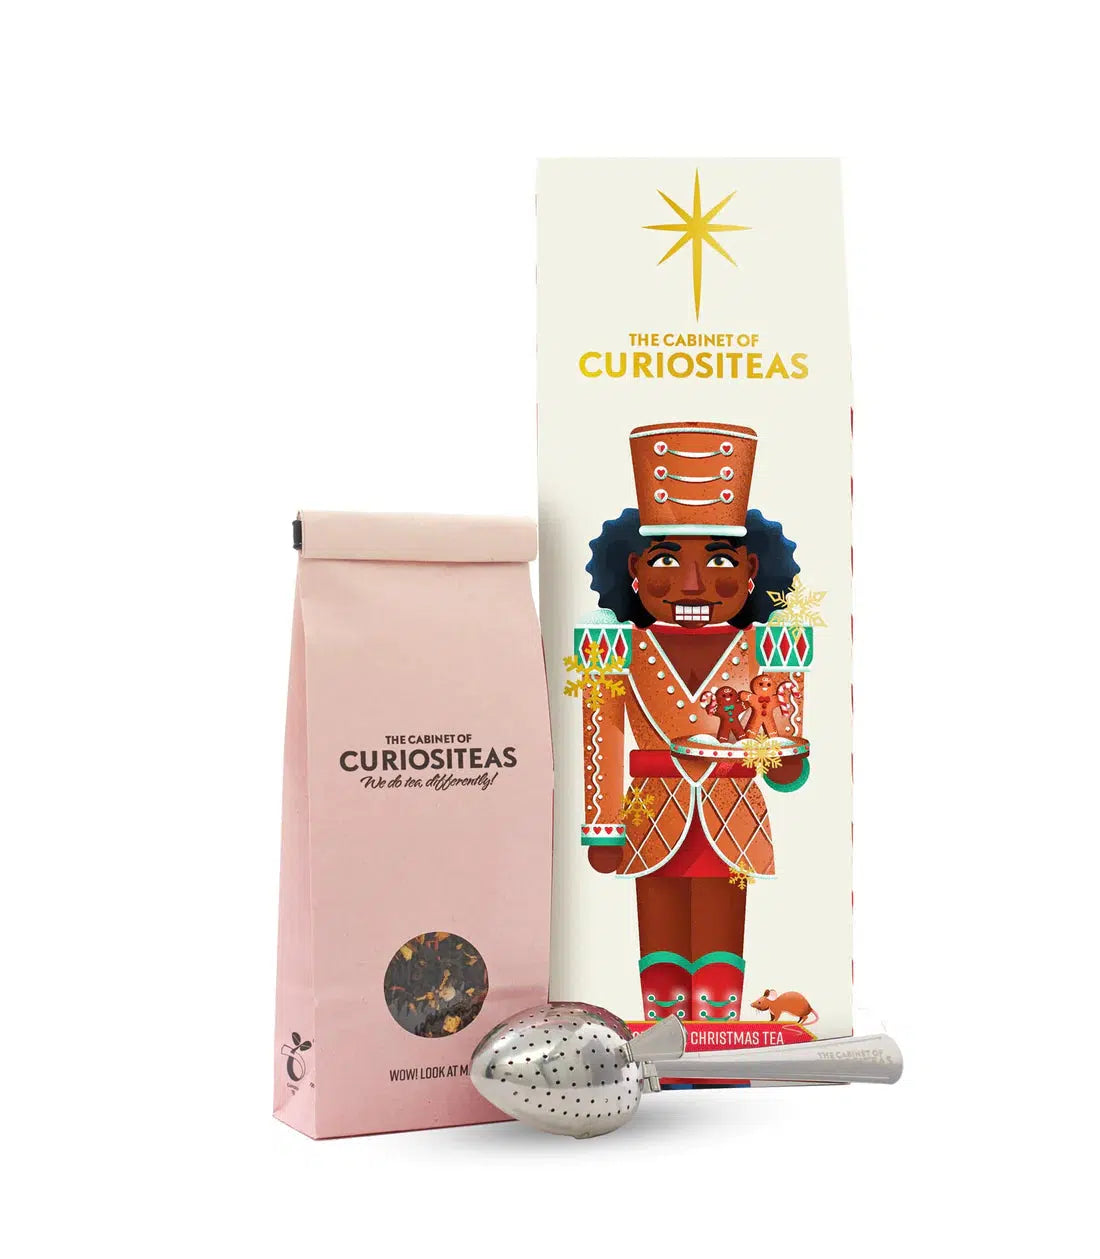 MINI COFFRET CADEAU Chocolat Chaud Saveurs Caramel Guimauve vanille caramel  EUR 23,40 - PicClick FR